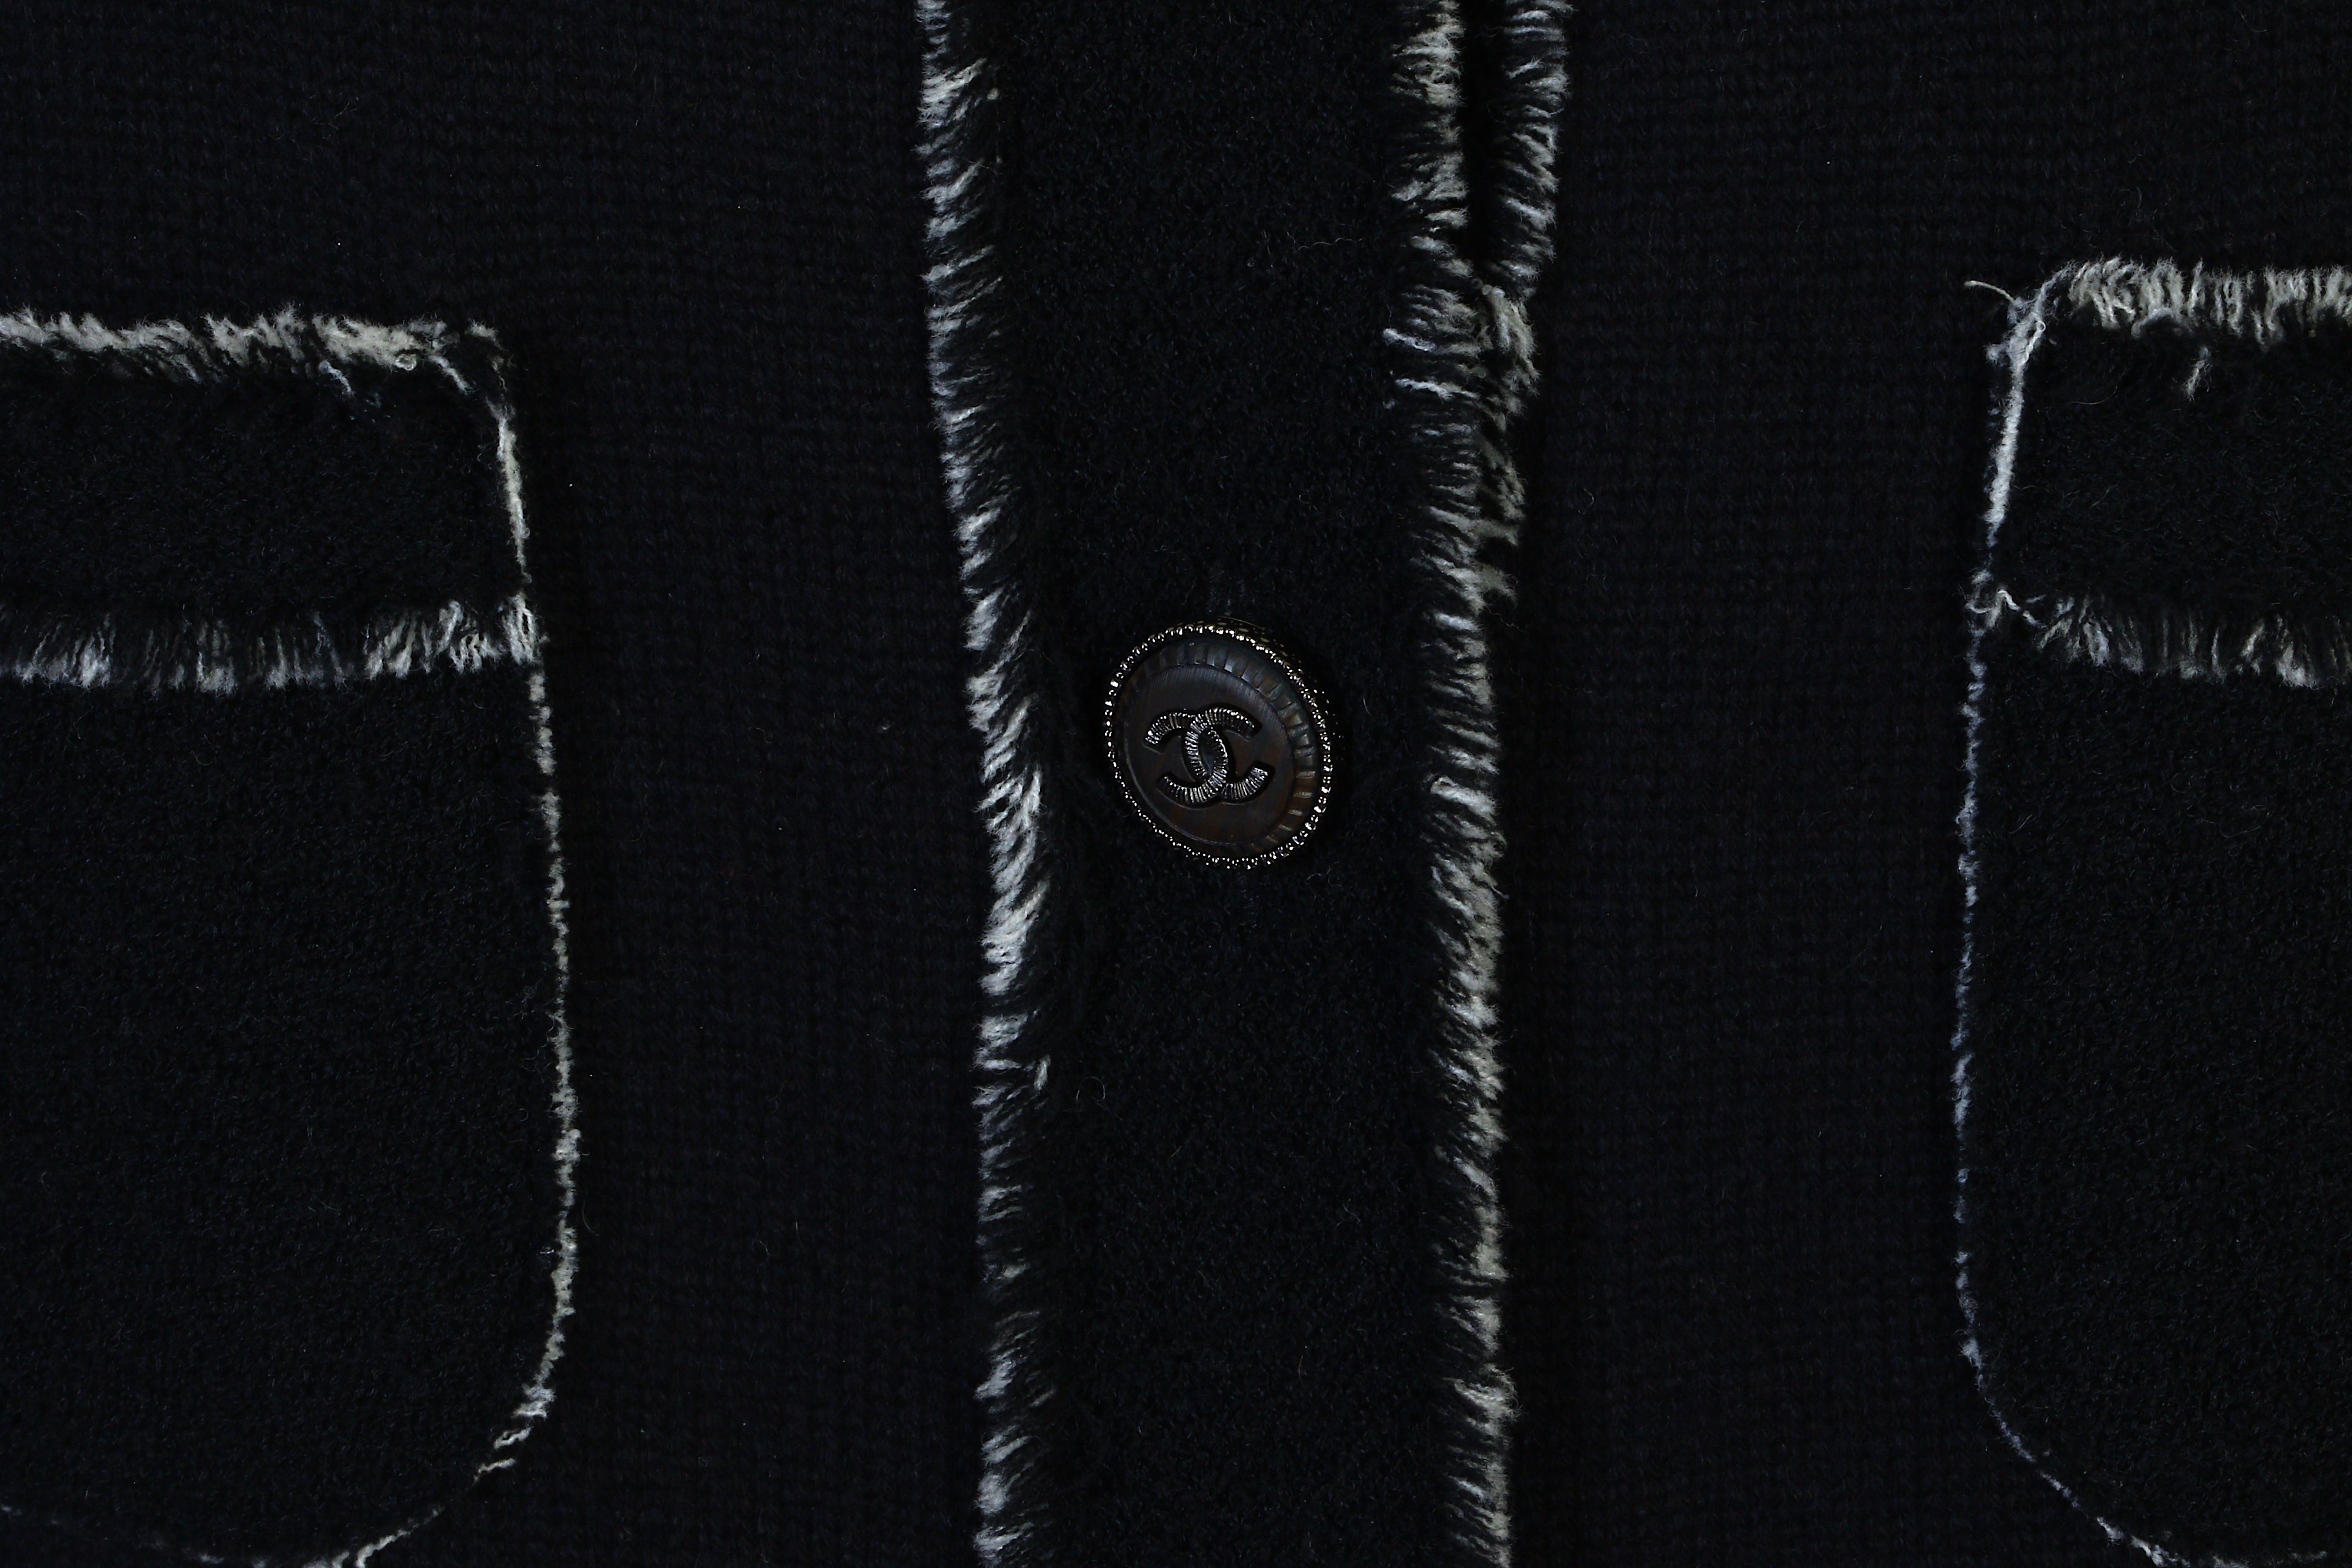 Chanel Black Cashmere Cardigan - Image 5 of 7